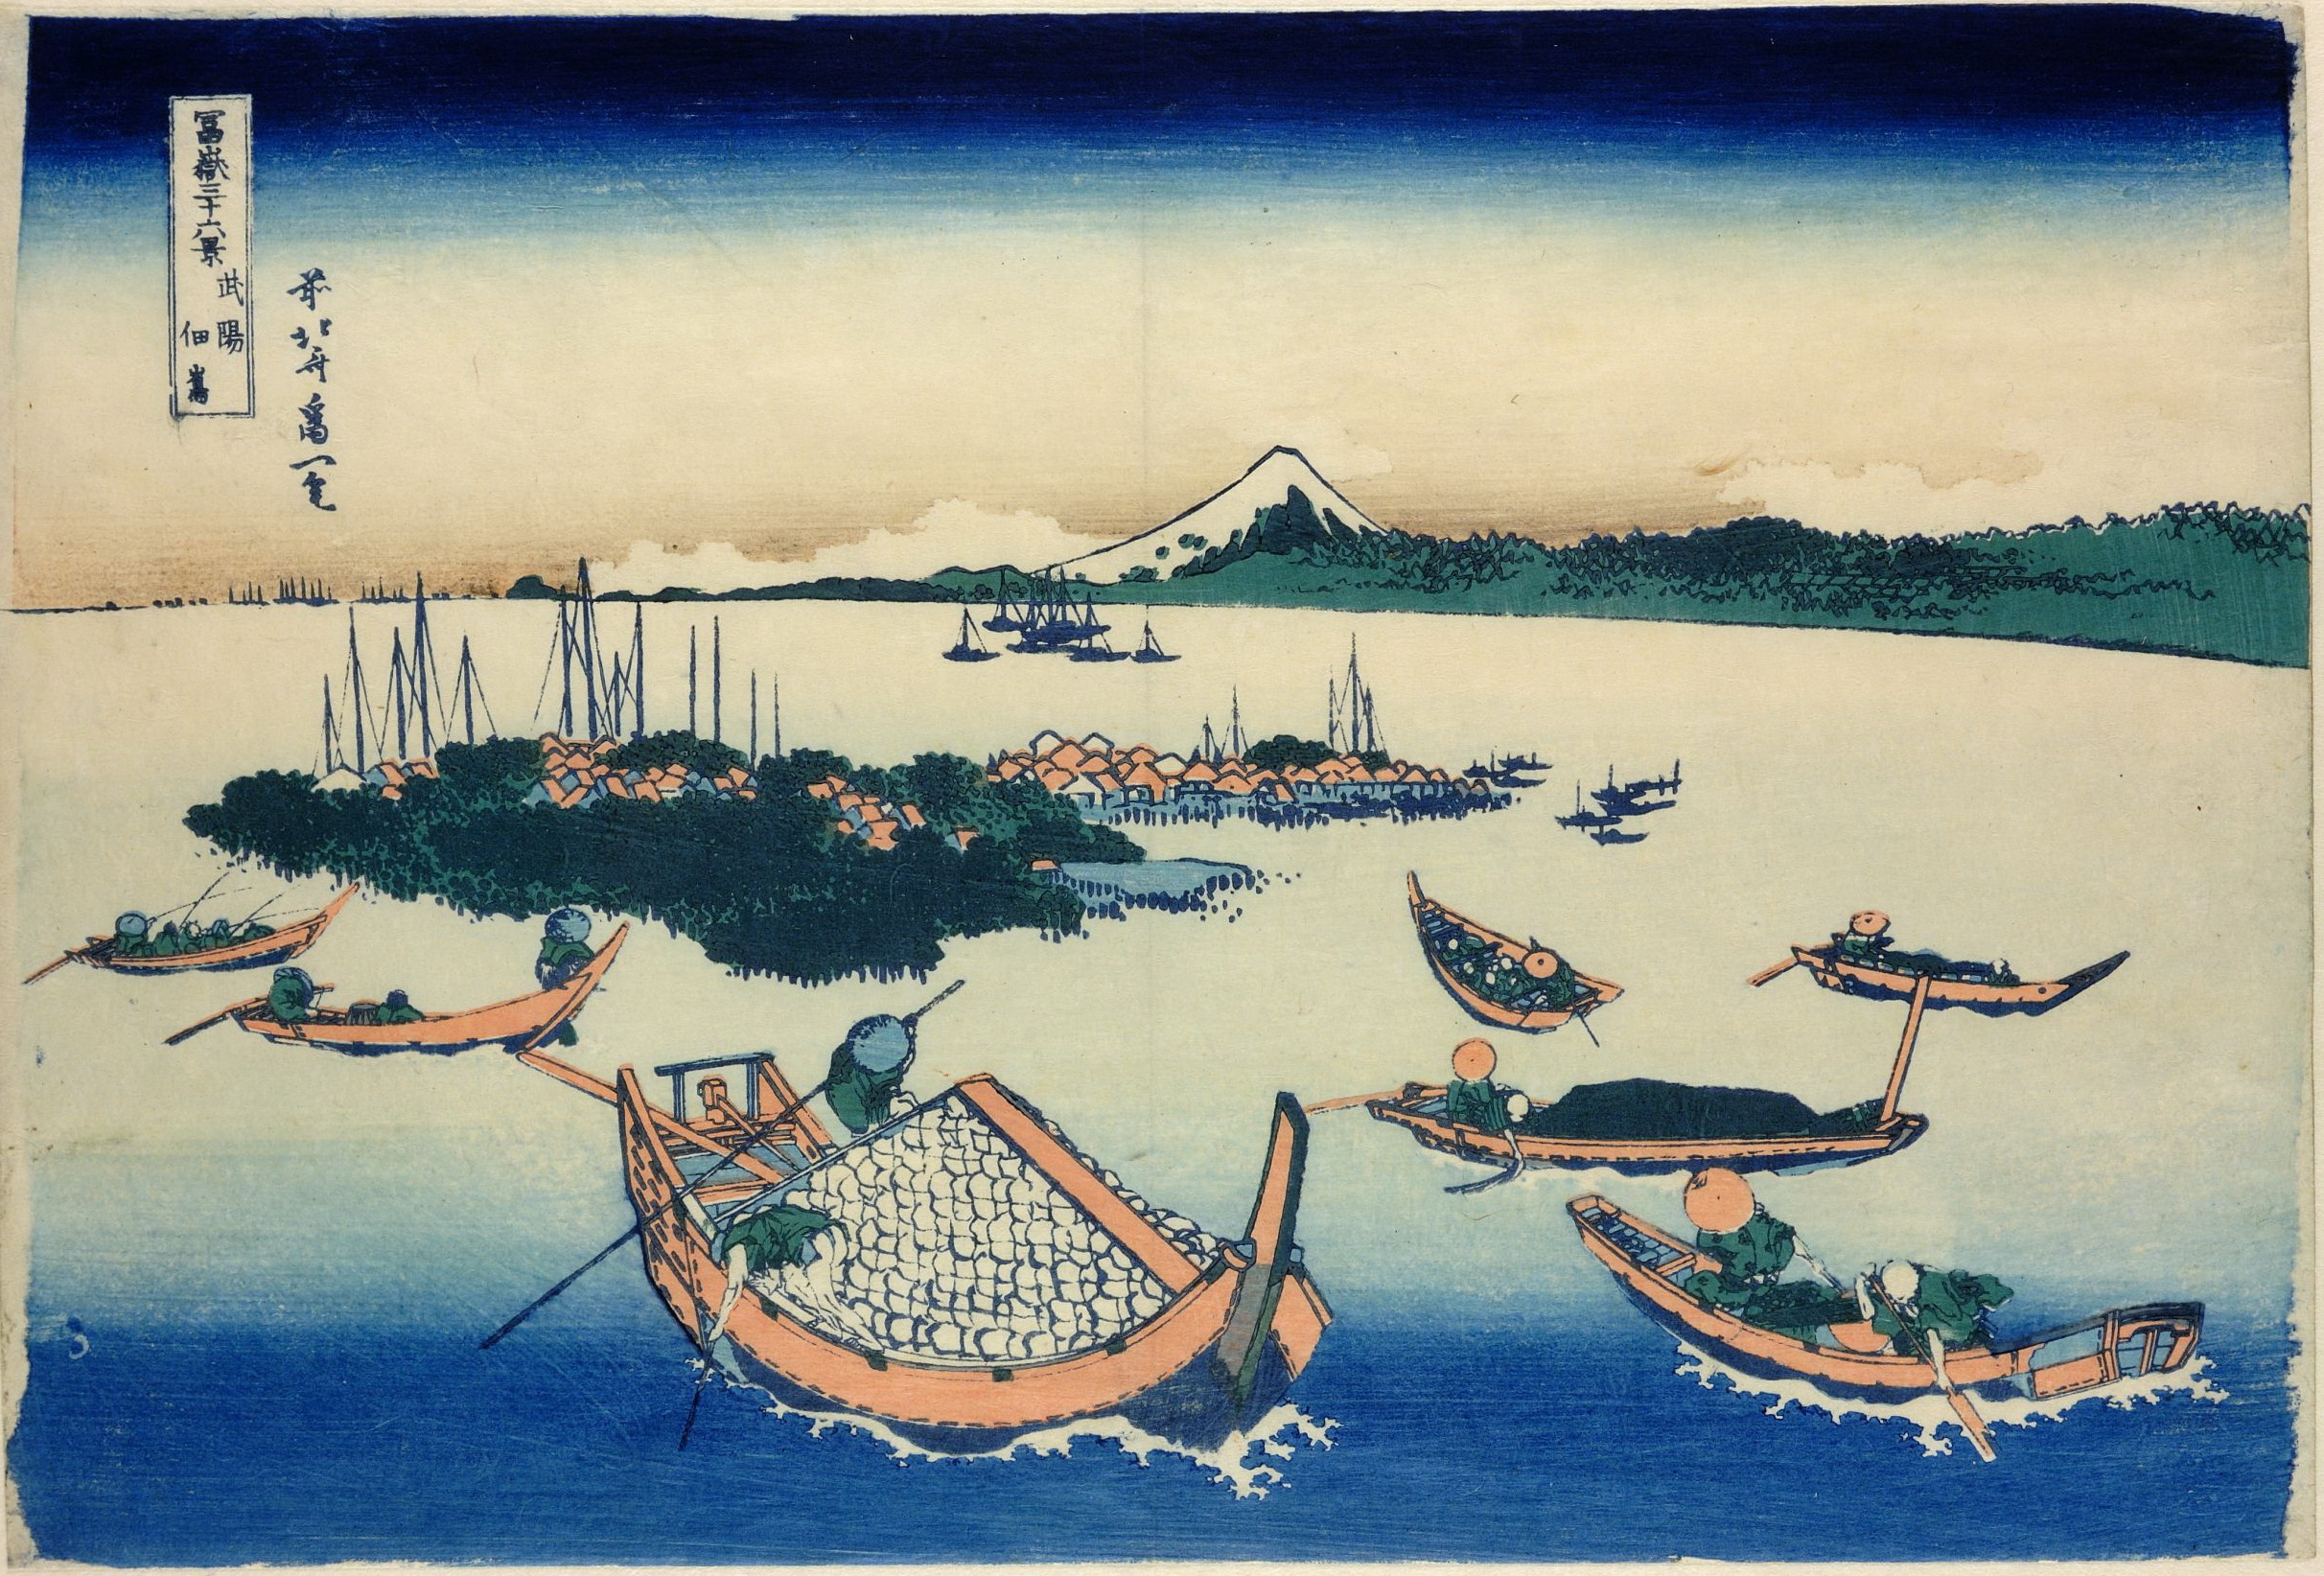 Katsushika Hokusai. Tsukudajima in Musashi Province, from the series Thirty-six Views of Mount Fuji